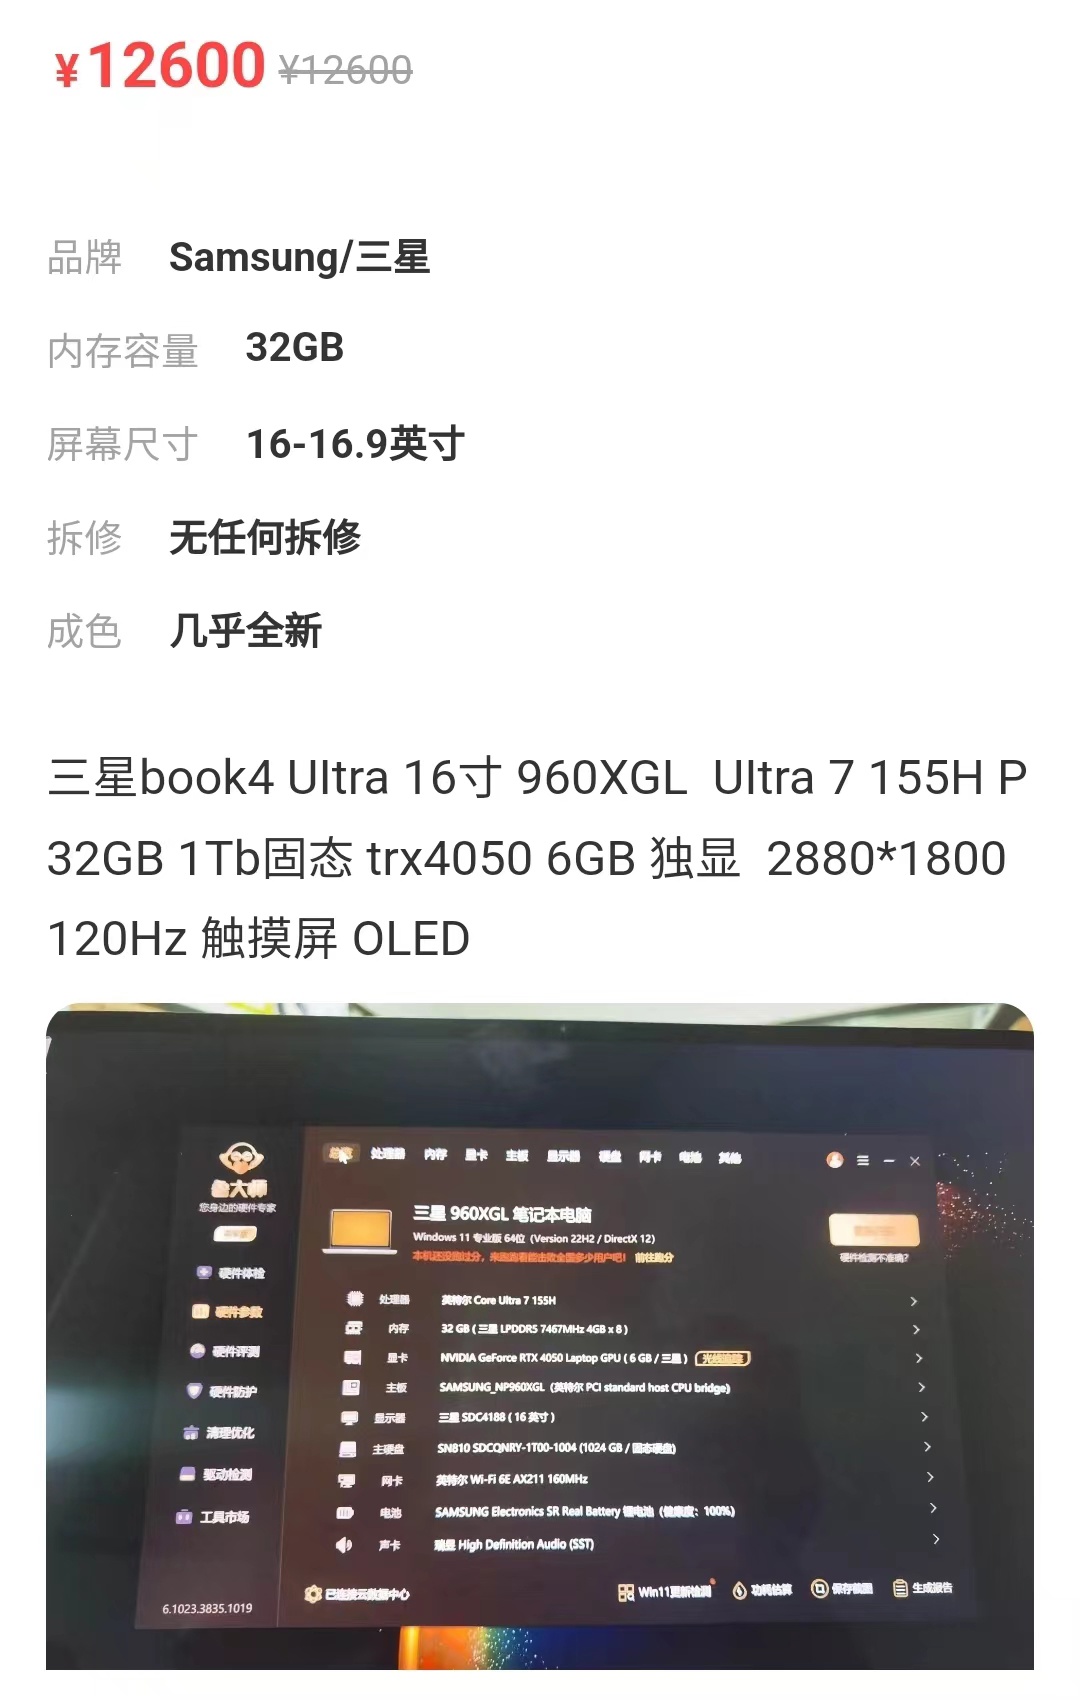 Samsung Galaxy Book 4 Ultra SoC, Price info revealed